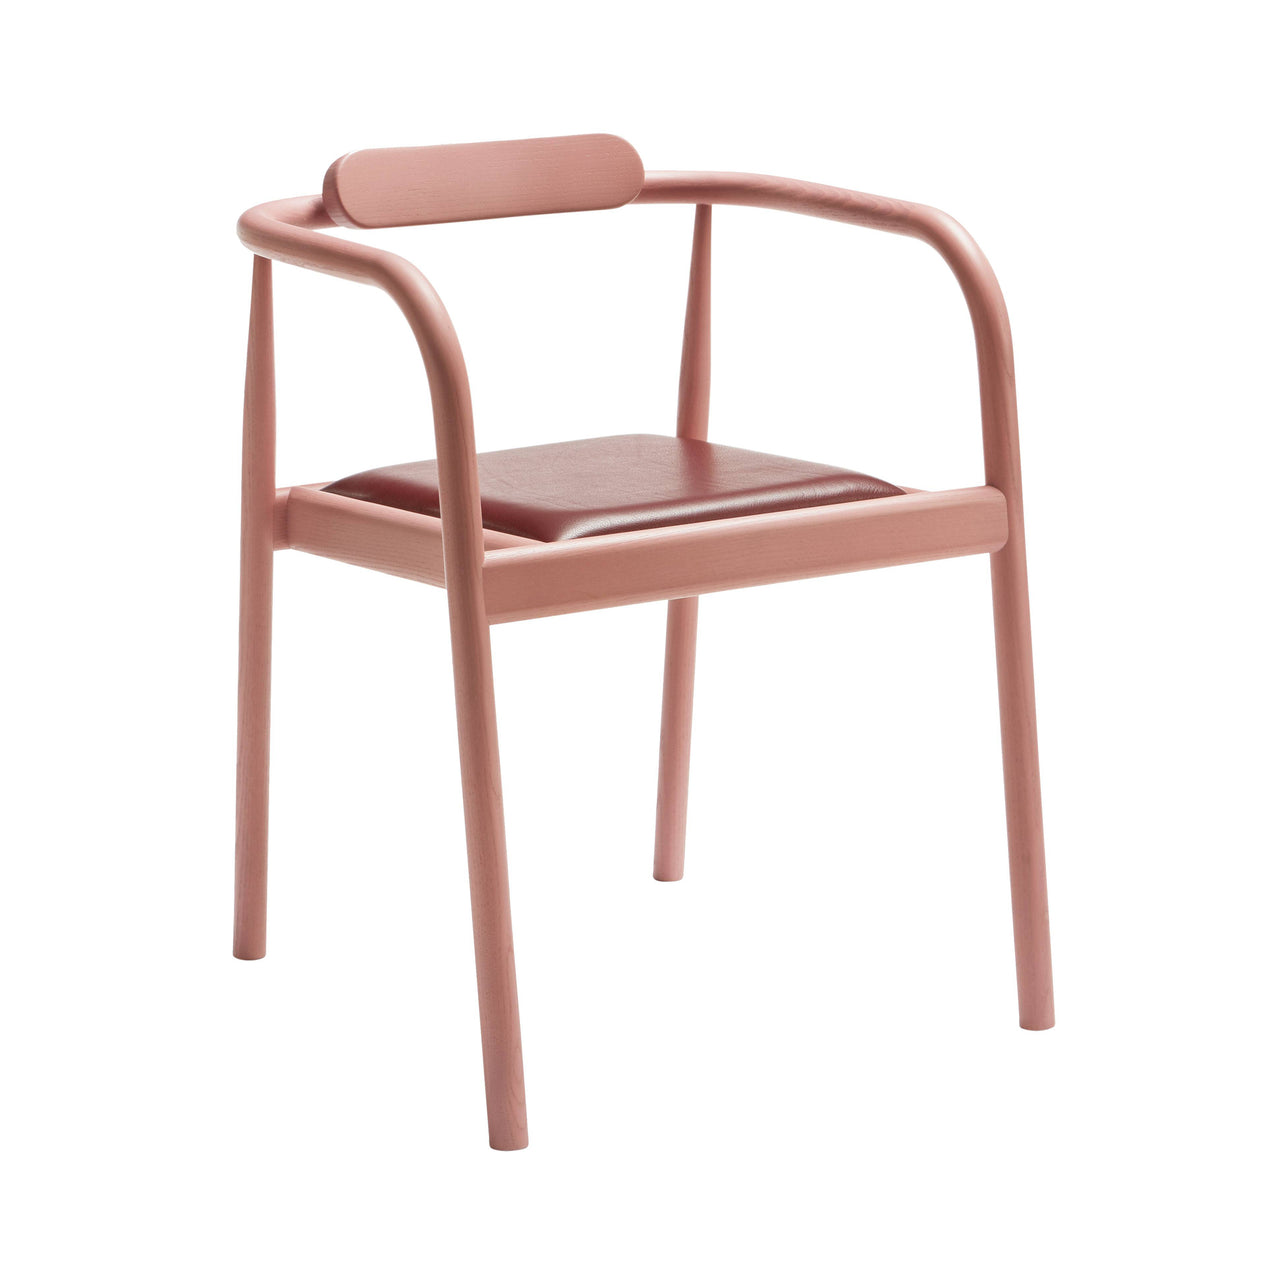 Ahm Chair: Upholstered + Jaipur